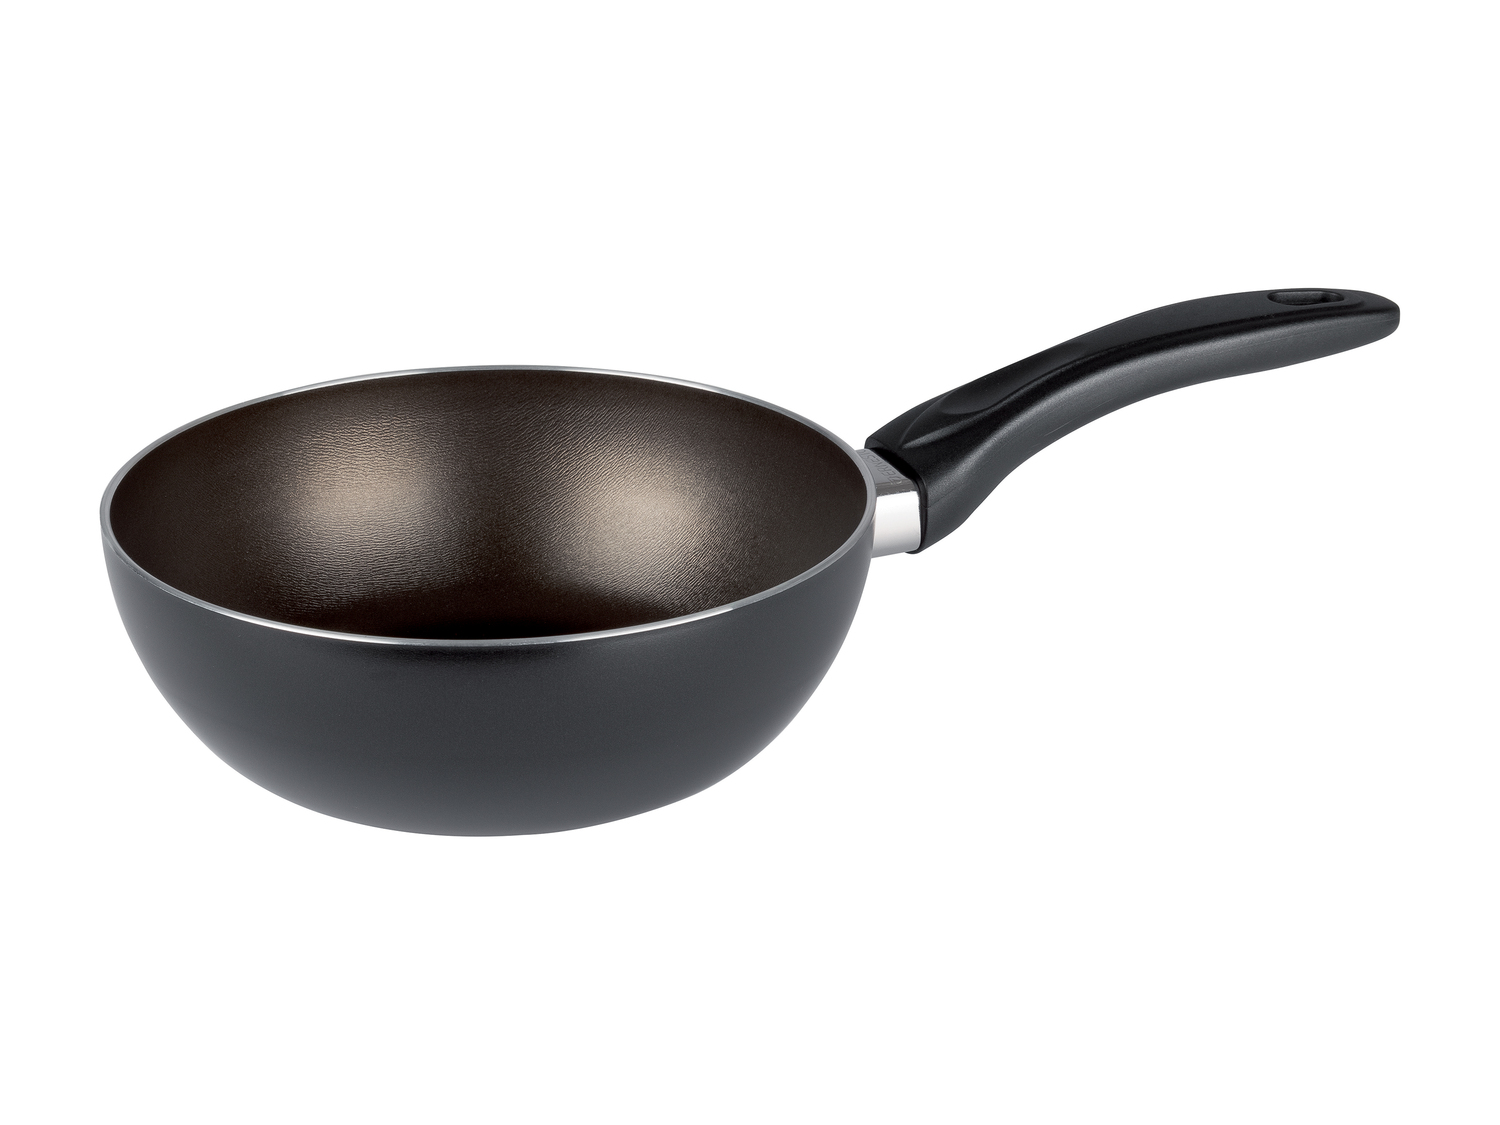 Mini-wok, mini casserole ou mini-poêle Ernesto, le prix 3.99 € 
Format idéal ...